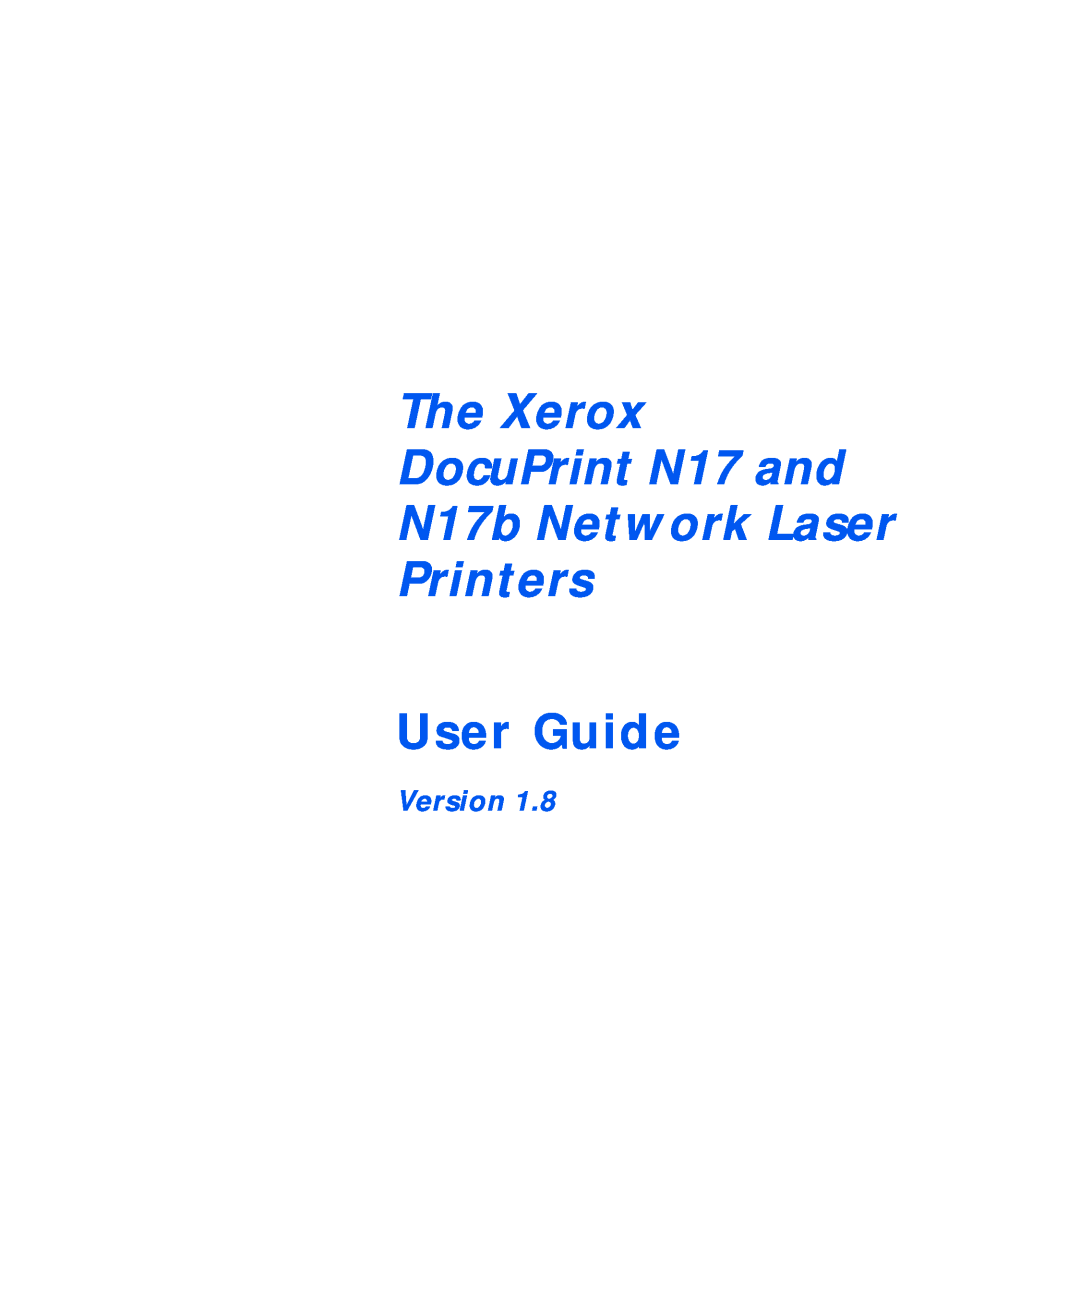 Xerox manual User Guide, The Xerox DocuPrint N17 and N17b Network Laser, Printers, Version 